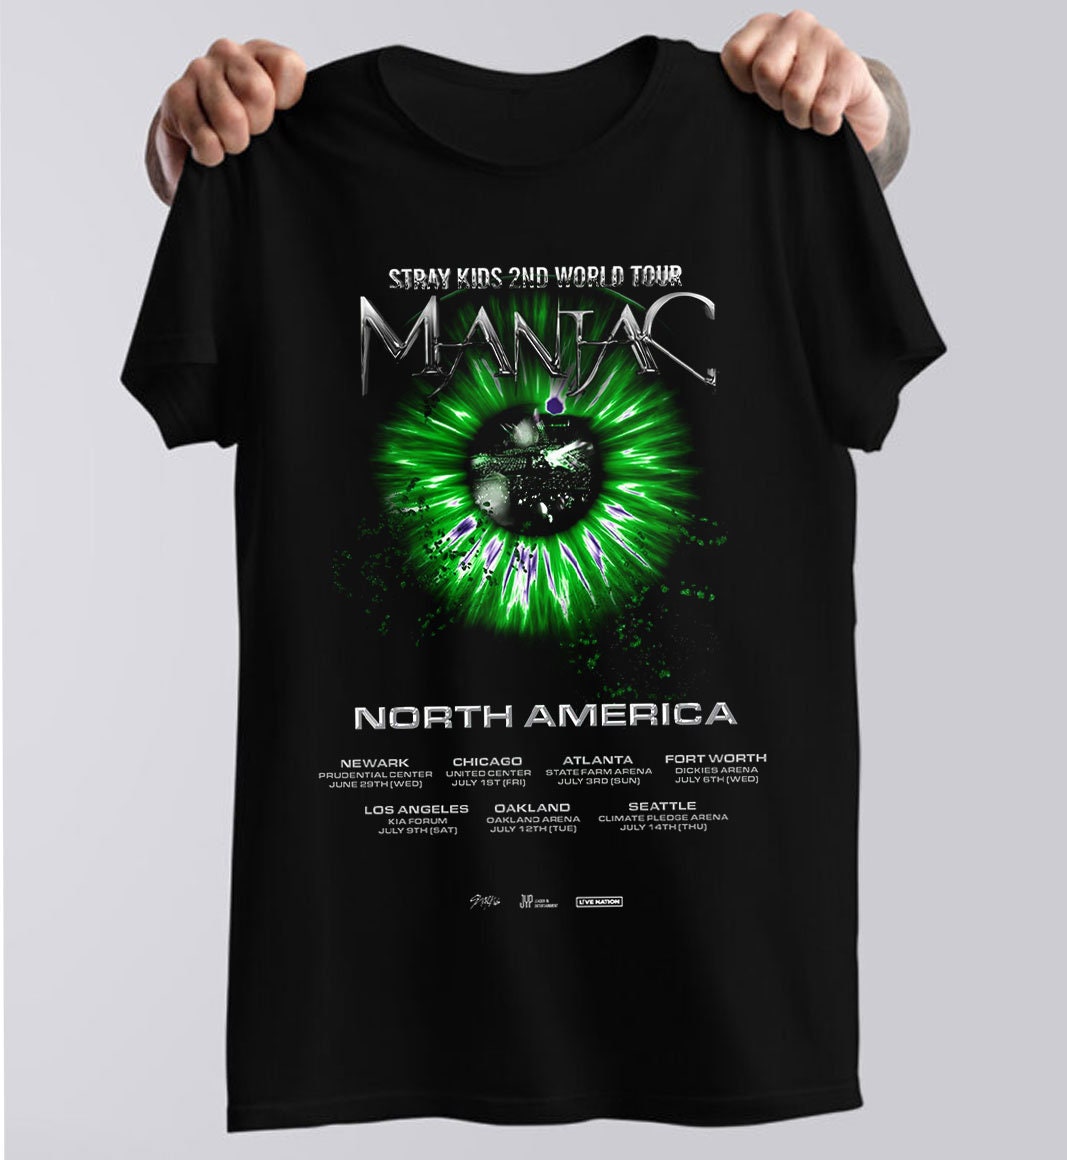 Stray Kids 2nd World Tour Maniac North America Shirt